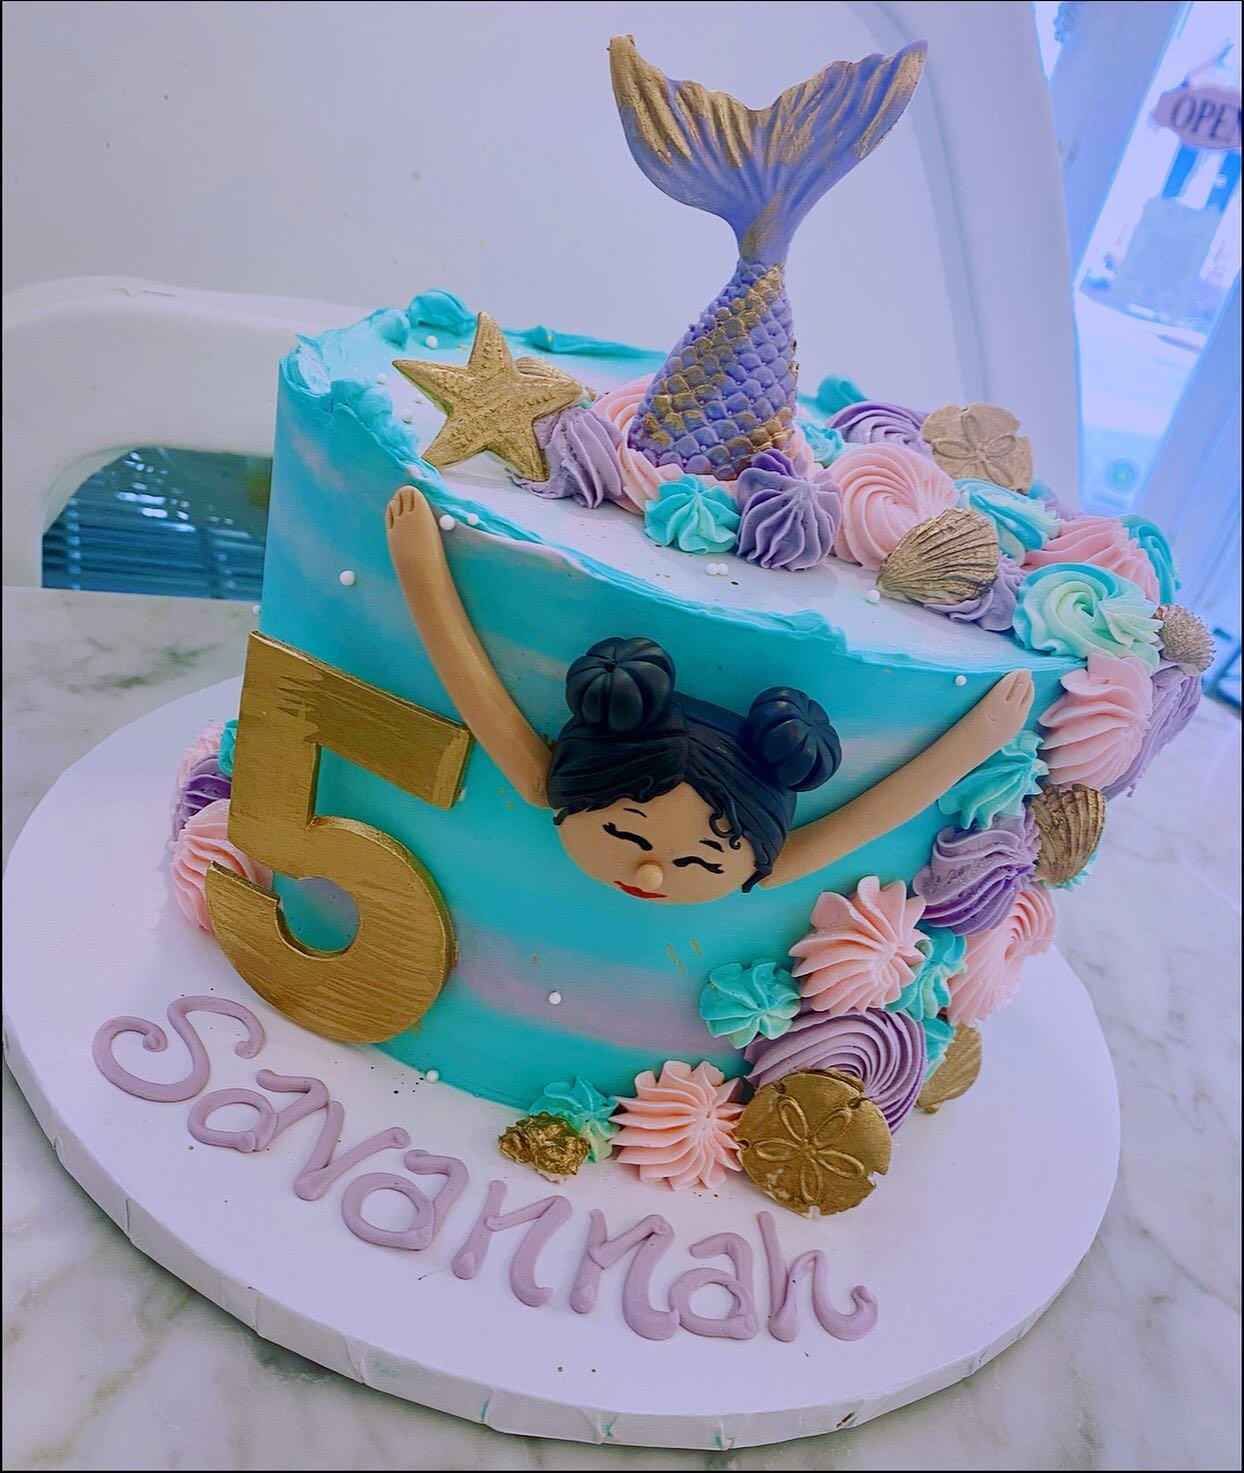 🌊🐚✨

#sweetandflour #secaucus #nj #njbakery #jersey #customcakes #cakelife #cupcakes #smallbusiness

#bakery #cake #baking #dessert #pastry #foodporn #instafood #chocolate #foodie #cookies #cakedecorating #birthdaycake #foodphotography #cupcakes #c